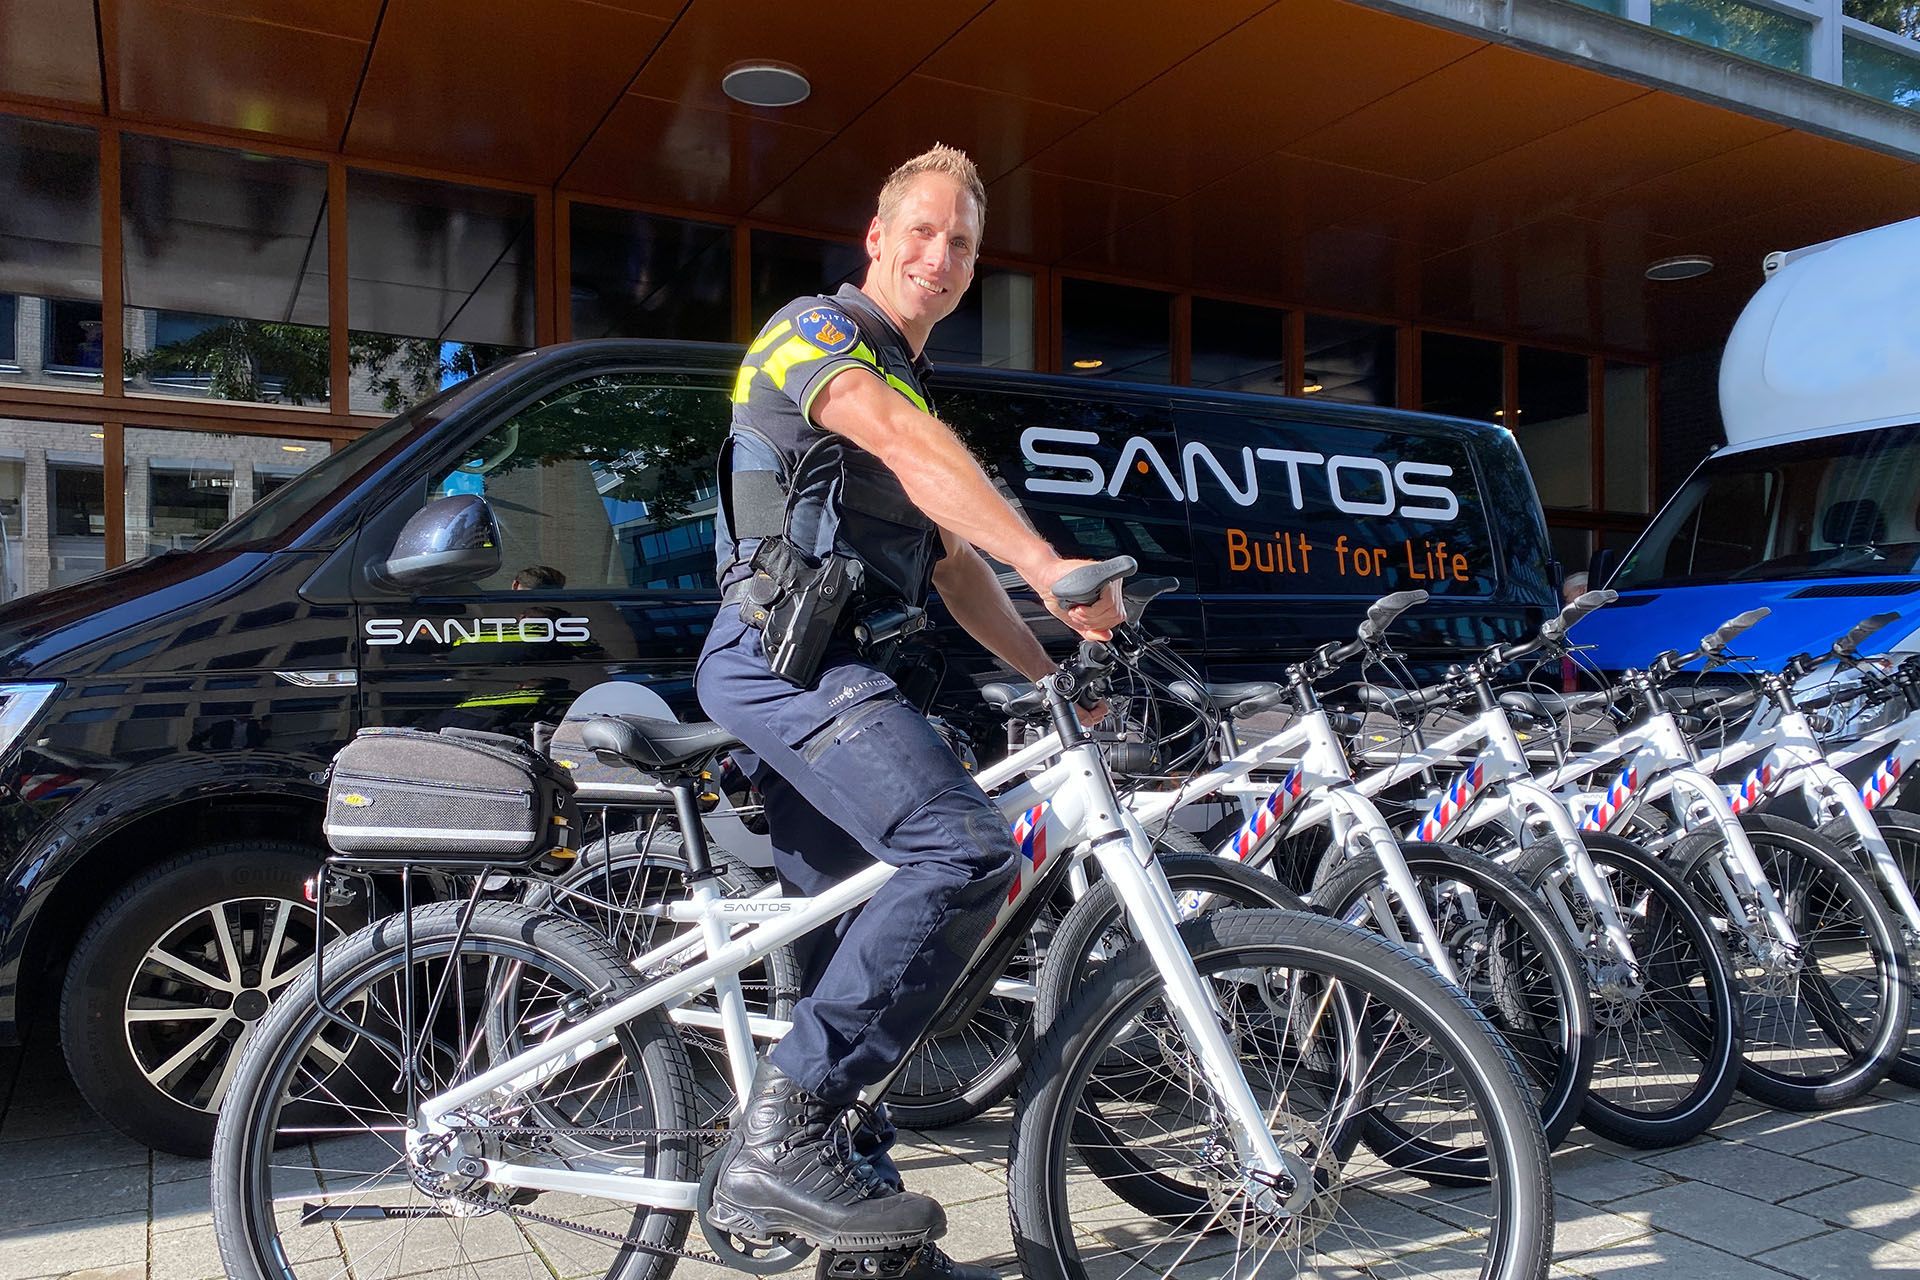 Santos Bike patrol for the Dutch police